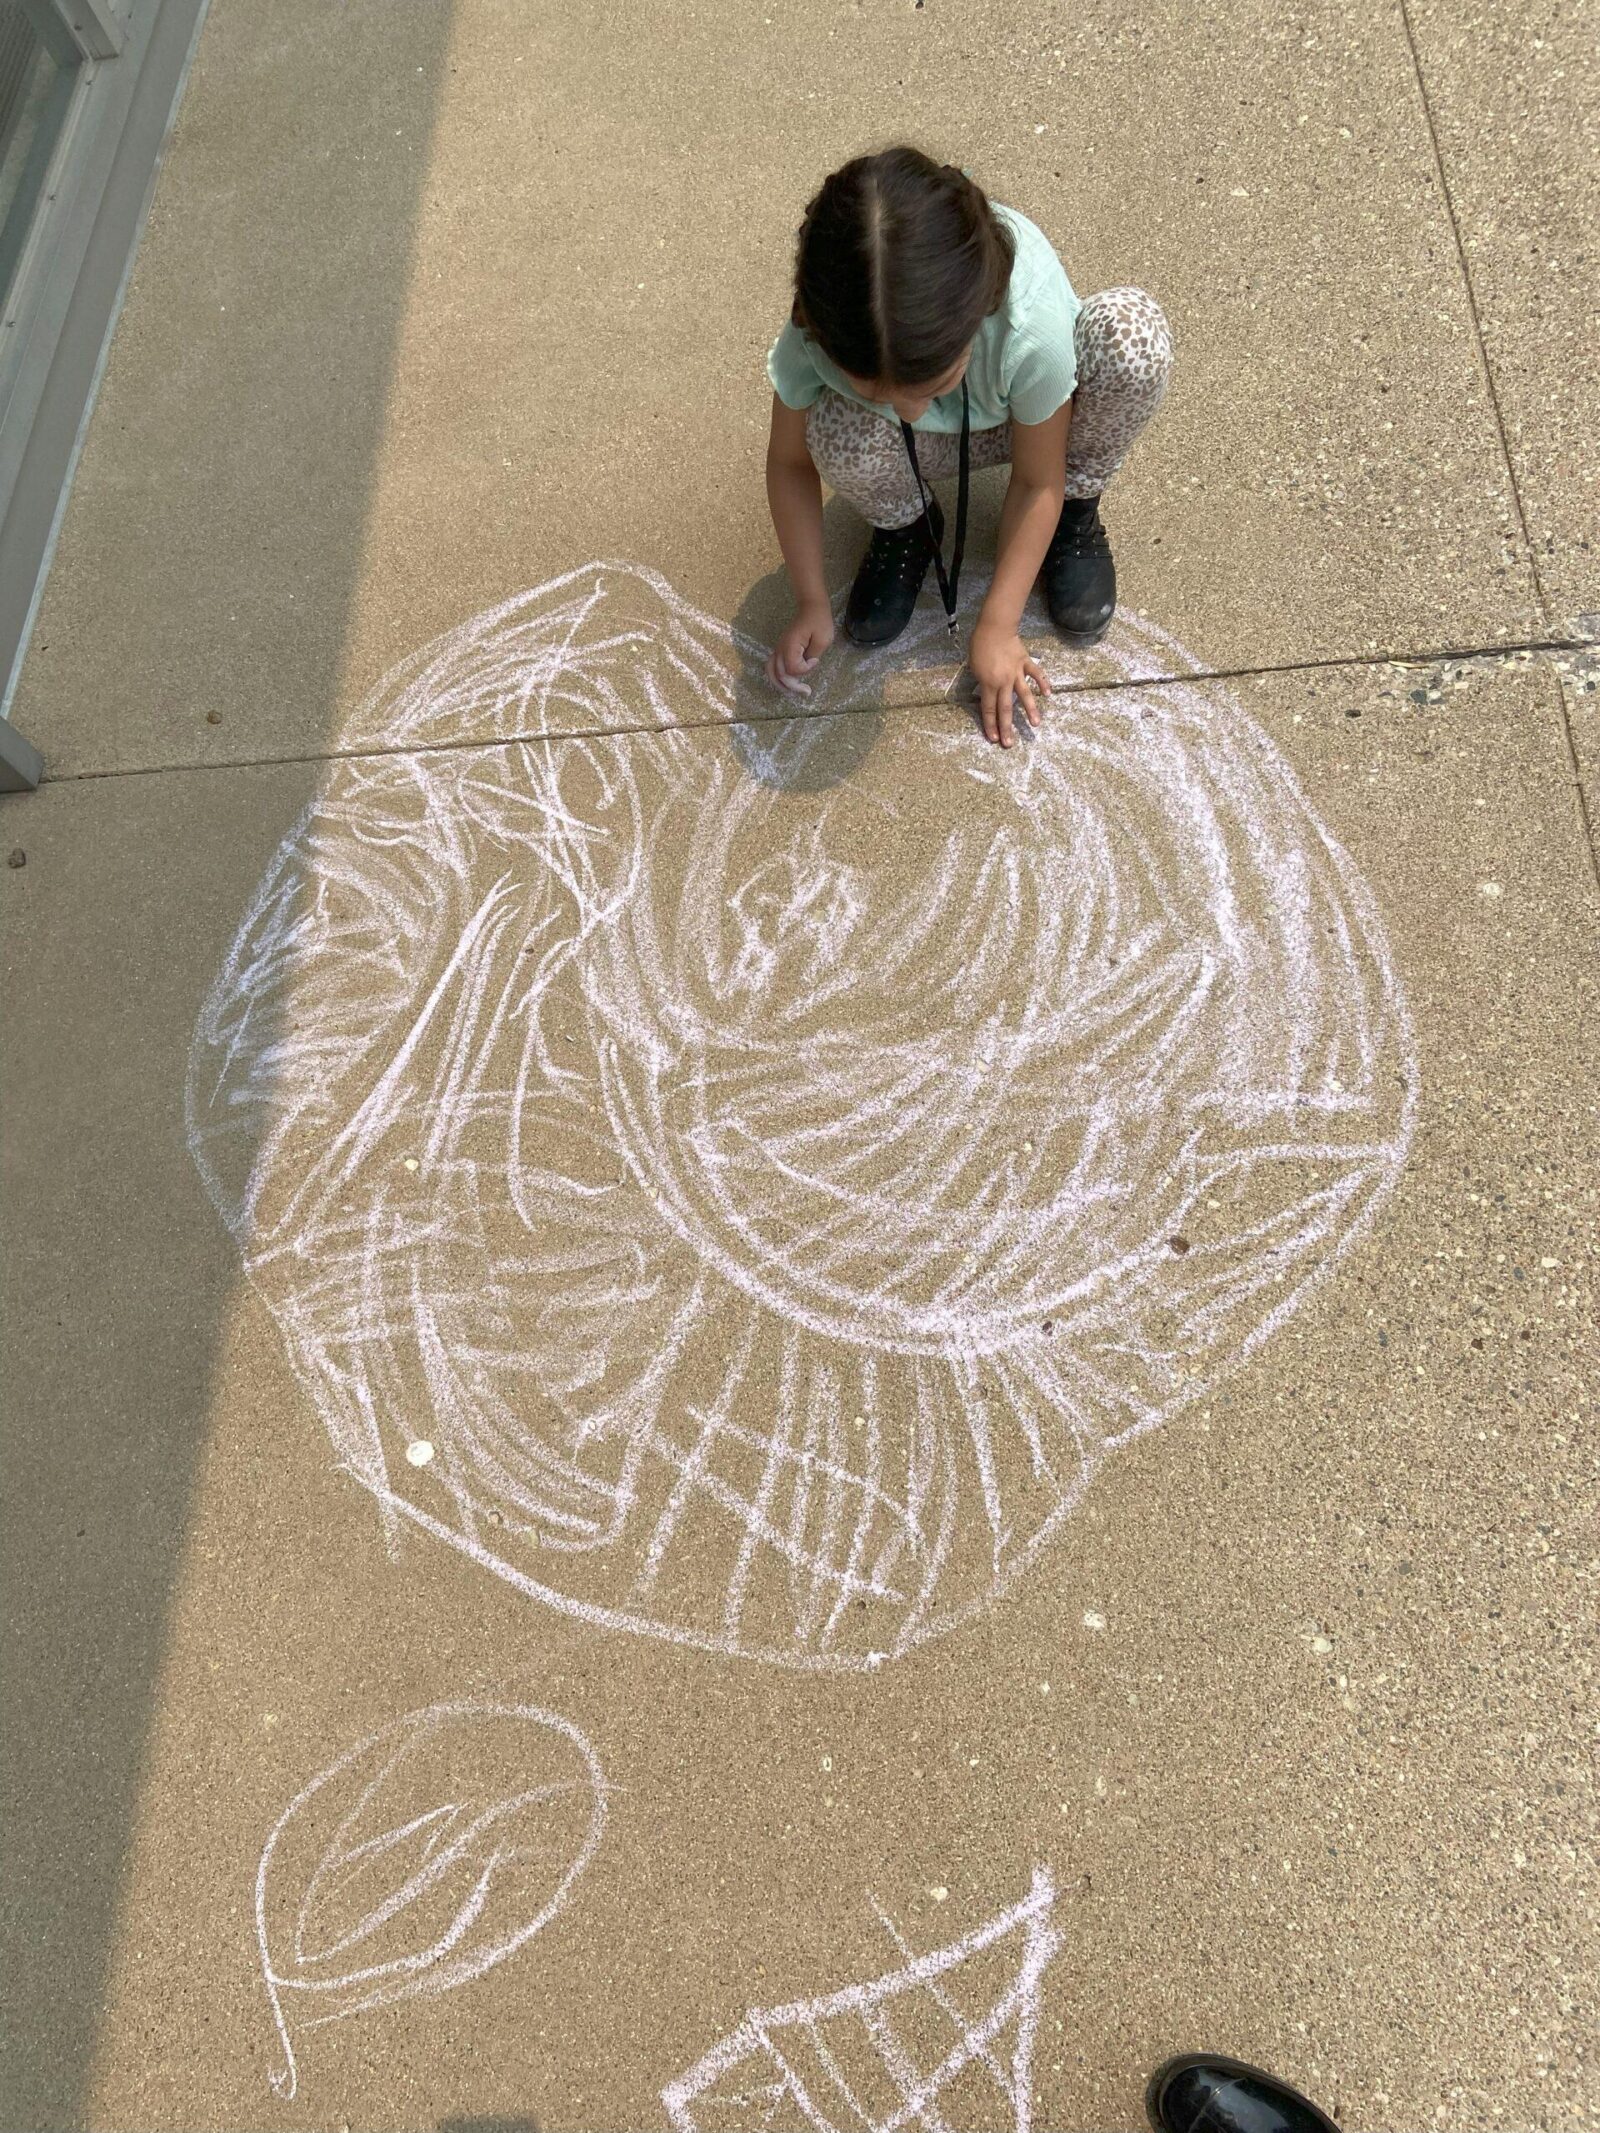 Student creating a sidewalk drawing